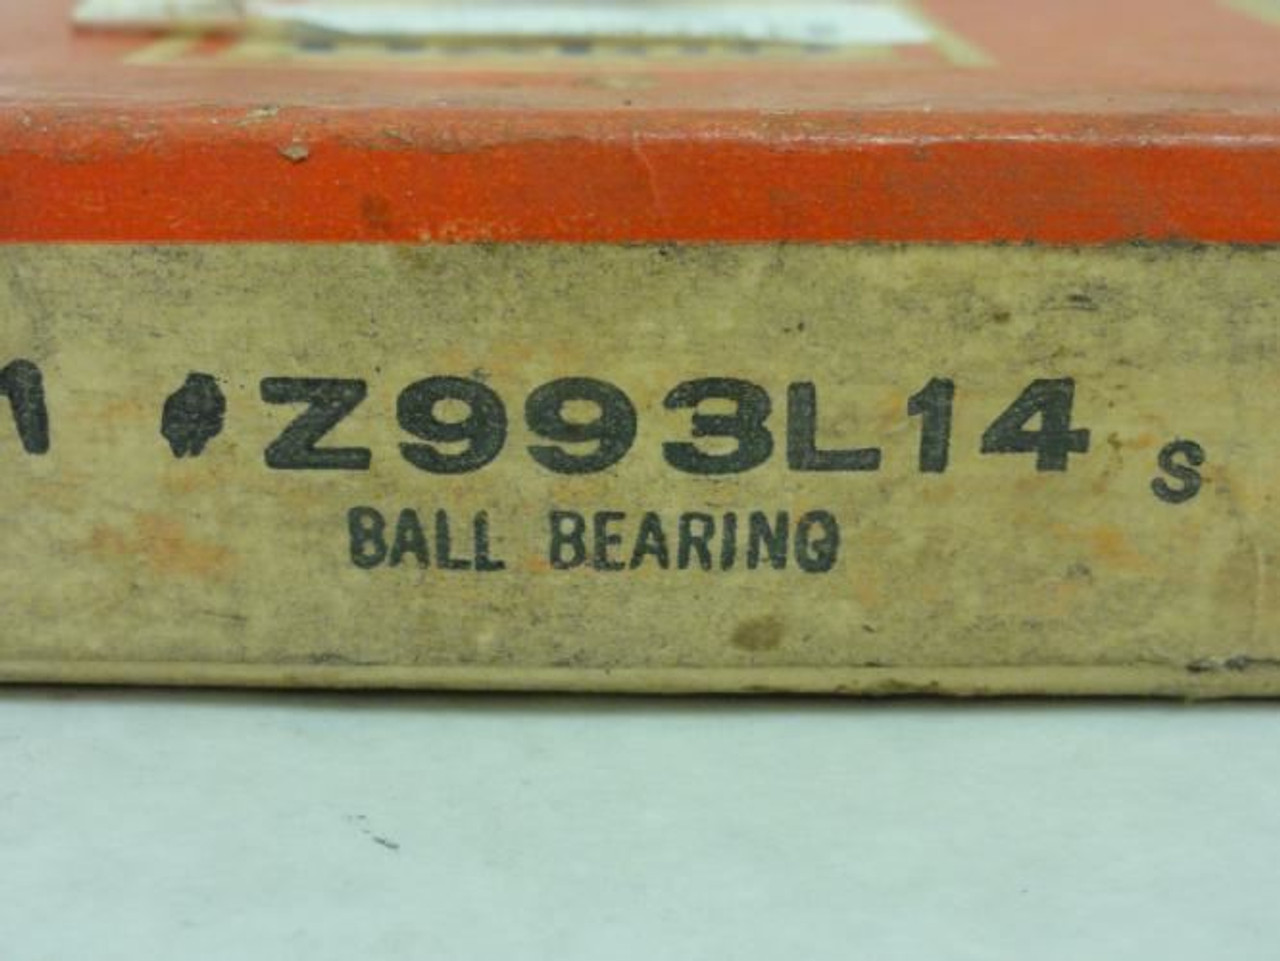 NDH/Delco Z993L14; Ball Bearing 70 ID x 110 OD x 20mm Wide